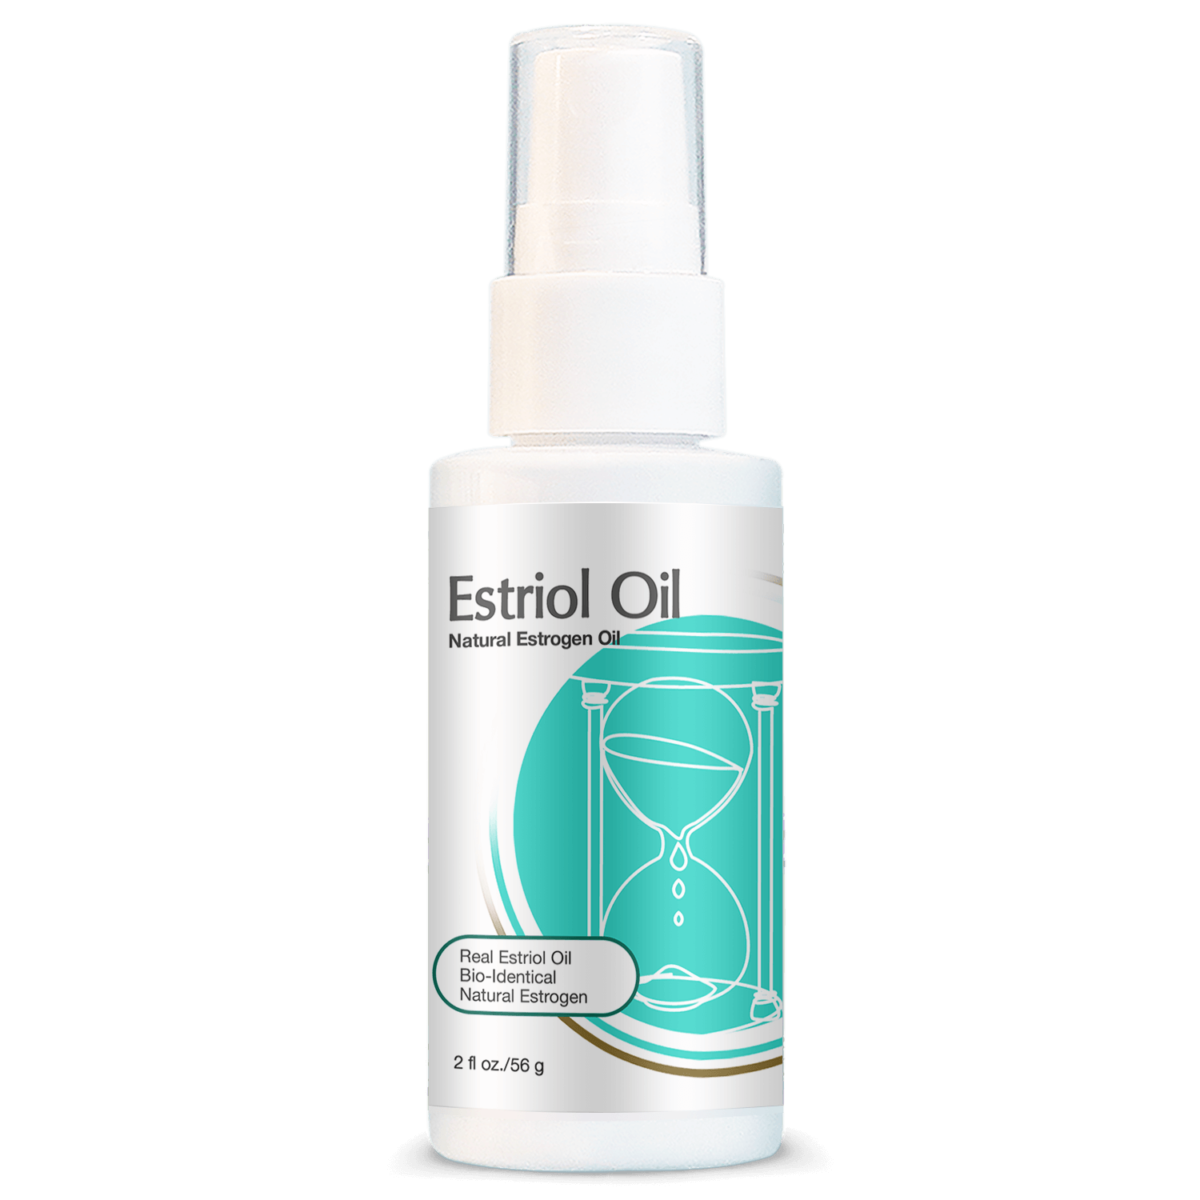 Estriol Oil Natural Estrogen Oil for Menopausal Symptom Relief